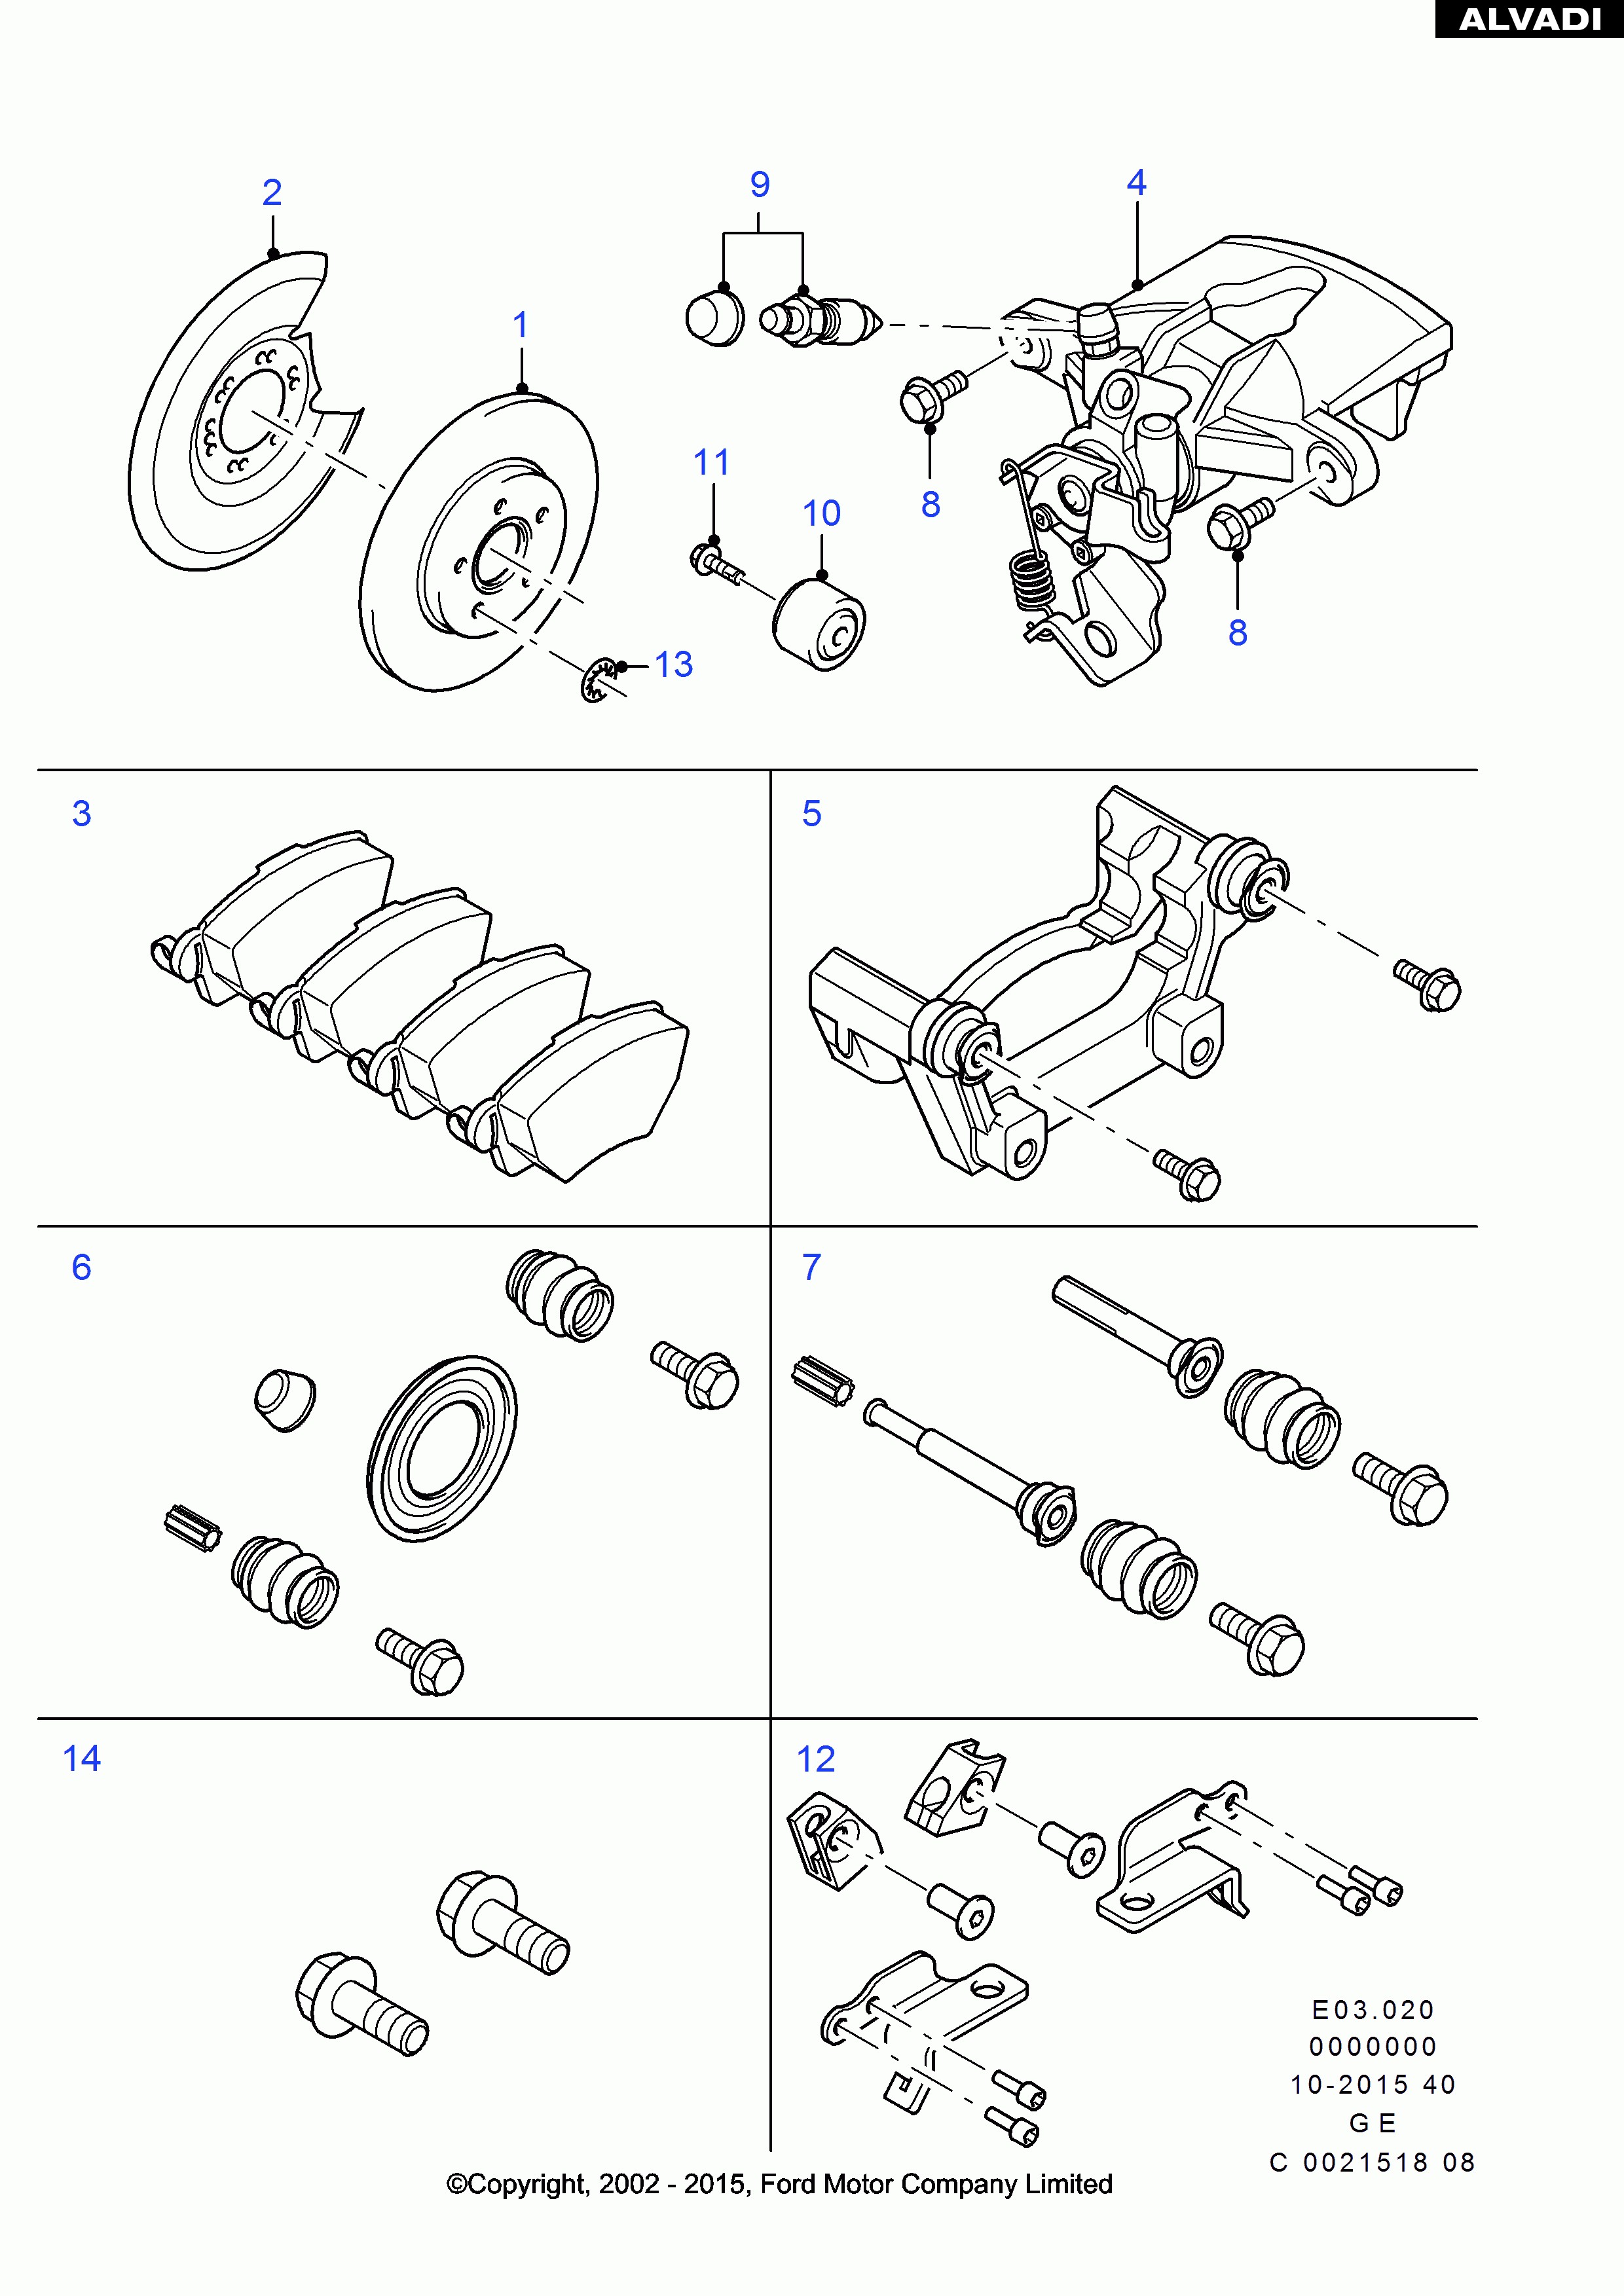 Rear Brake System Diagram ford Rear Brake Discs and Calipers Of Rear Brake System Diagram